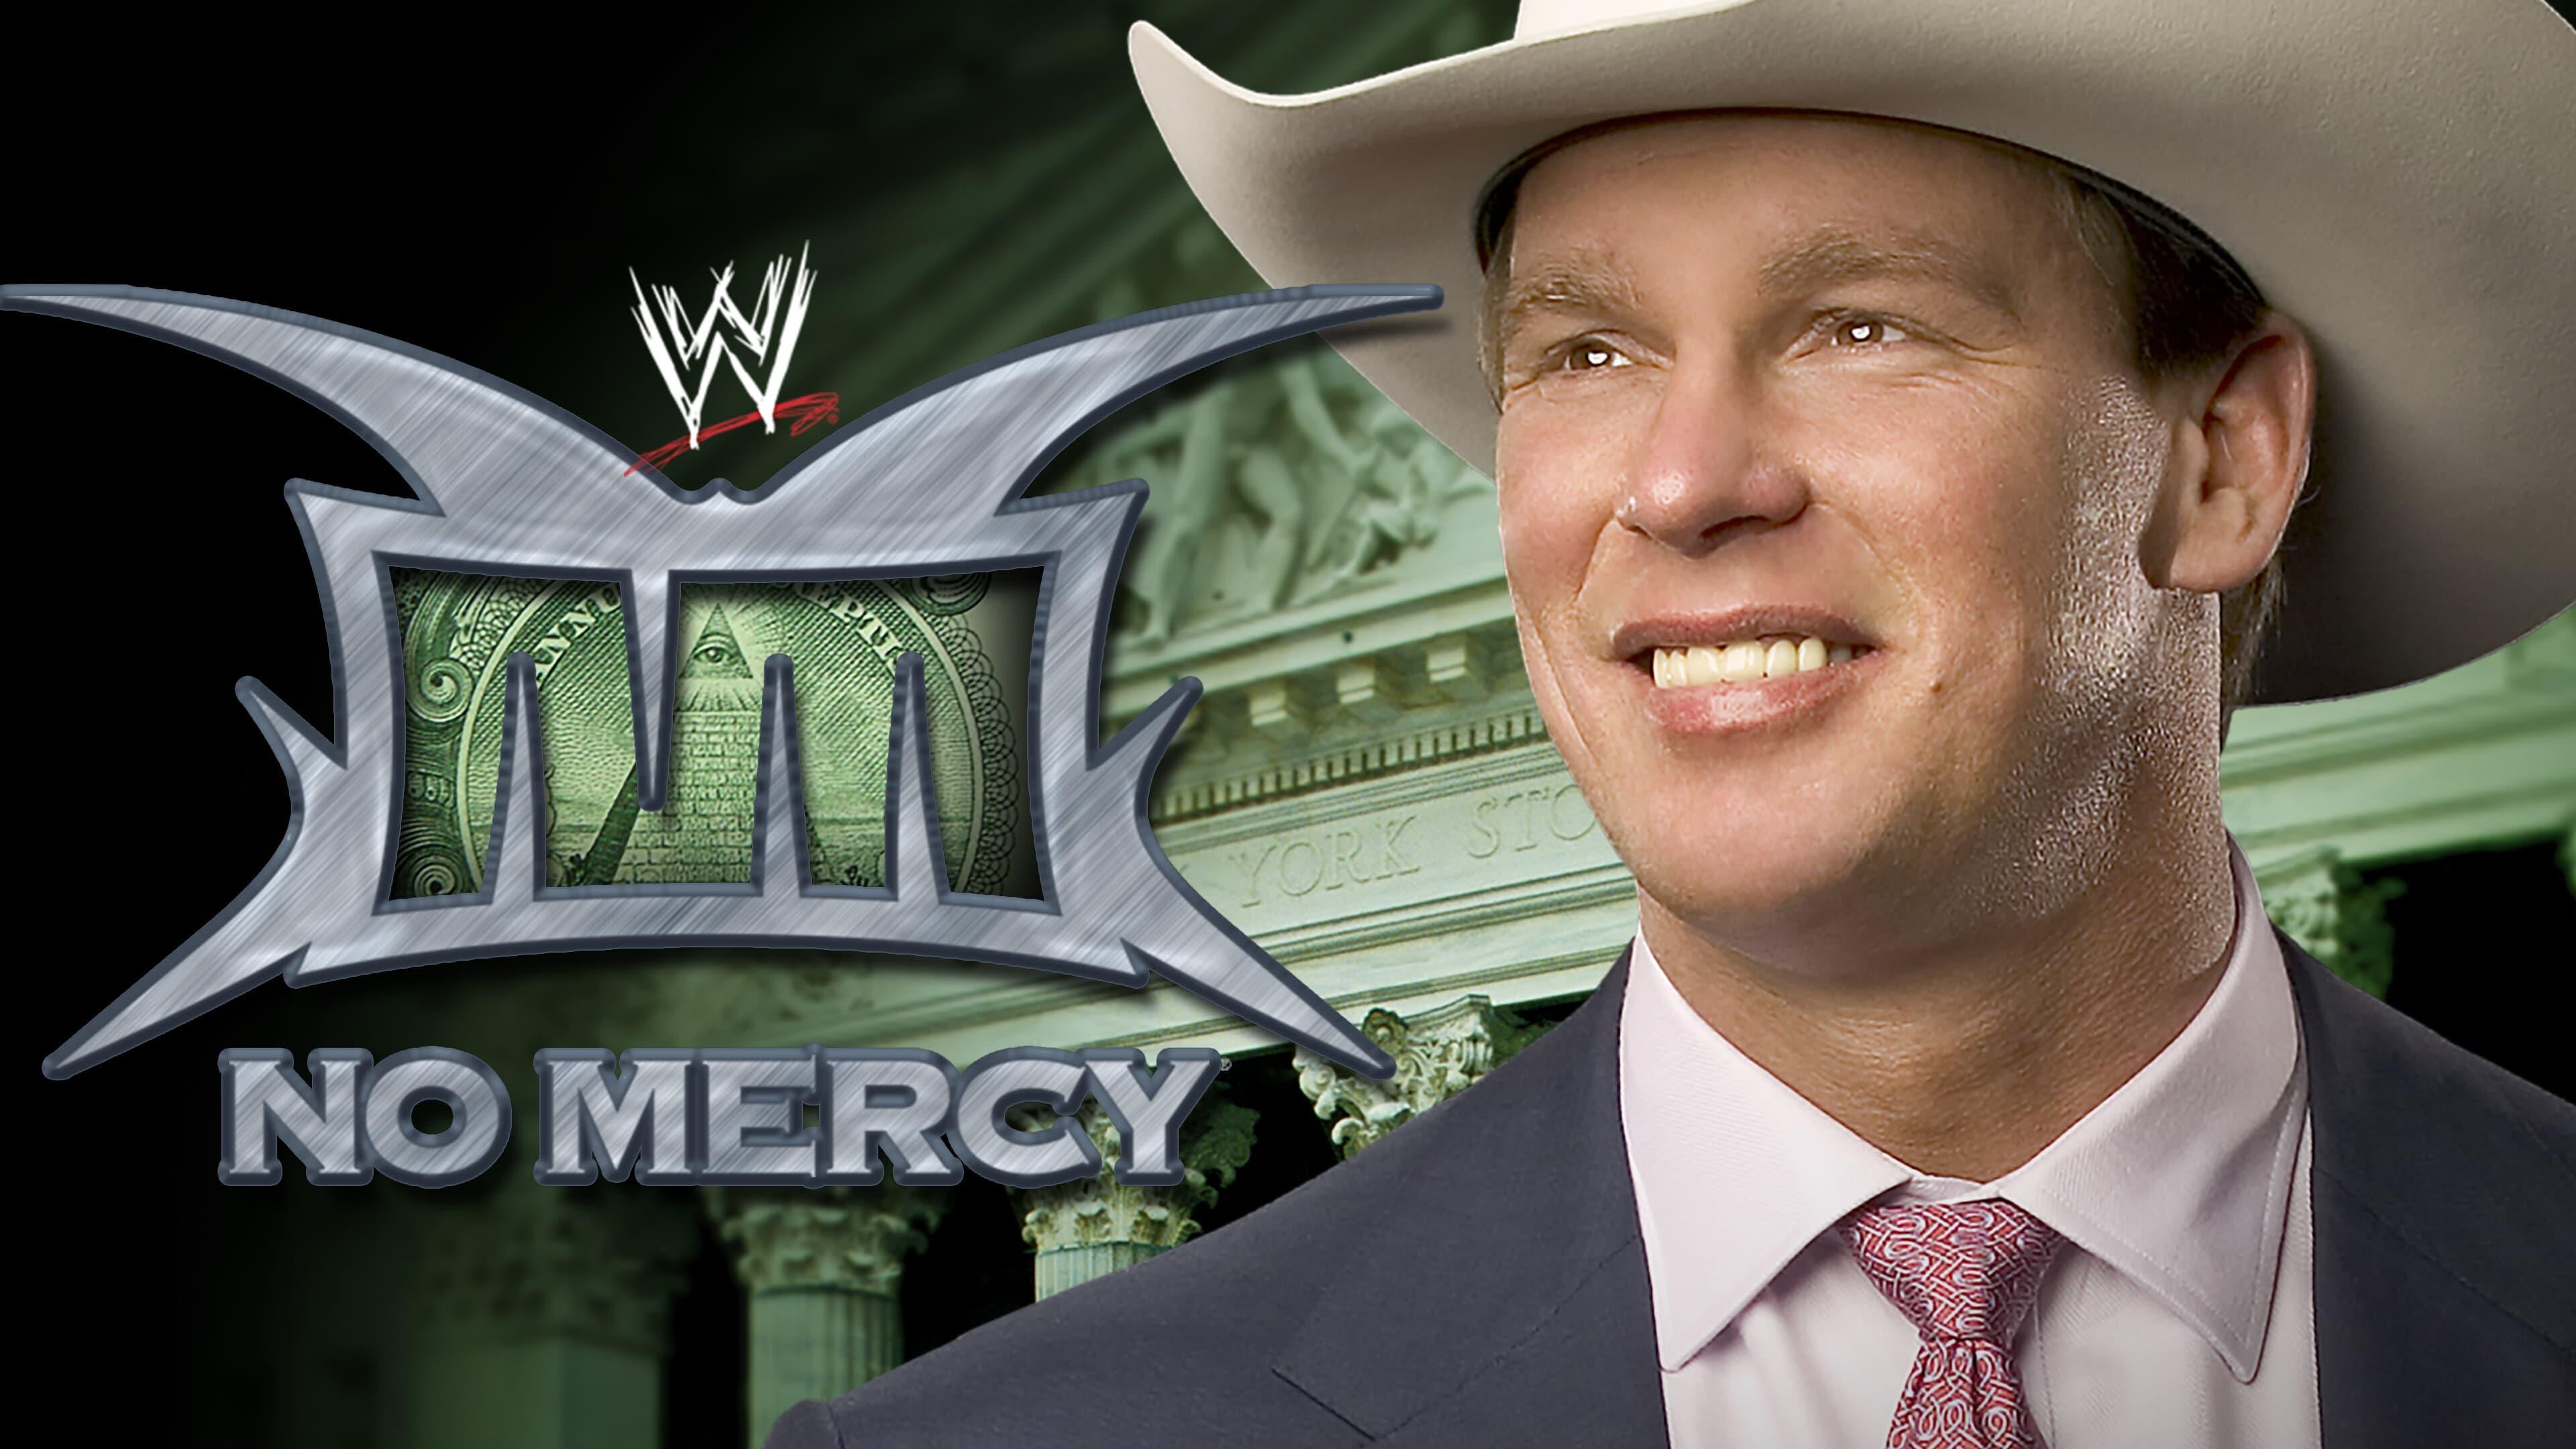 WWE No Mercy 2004 backdrop